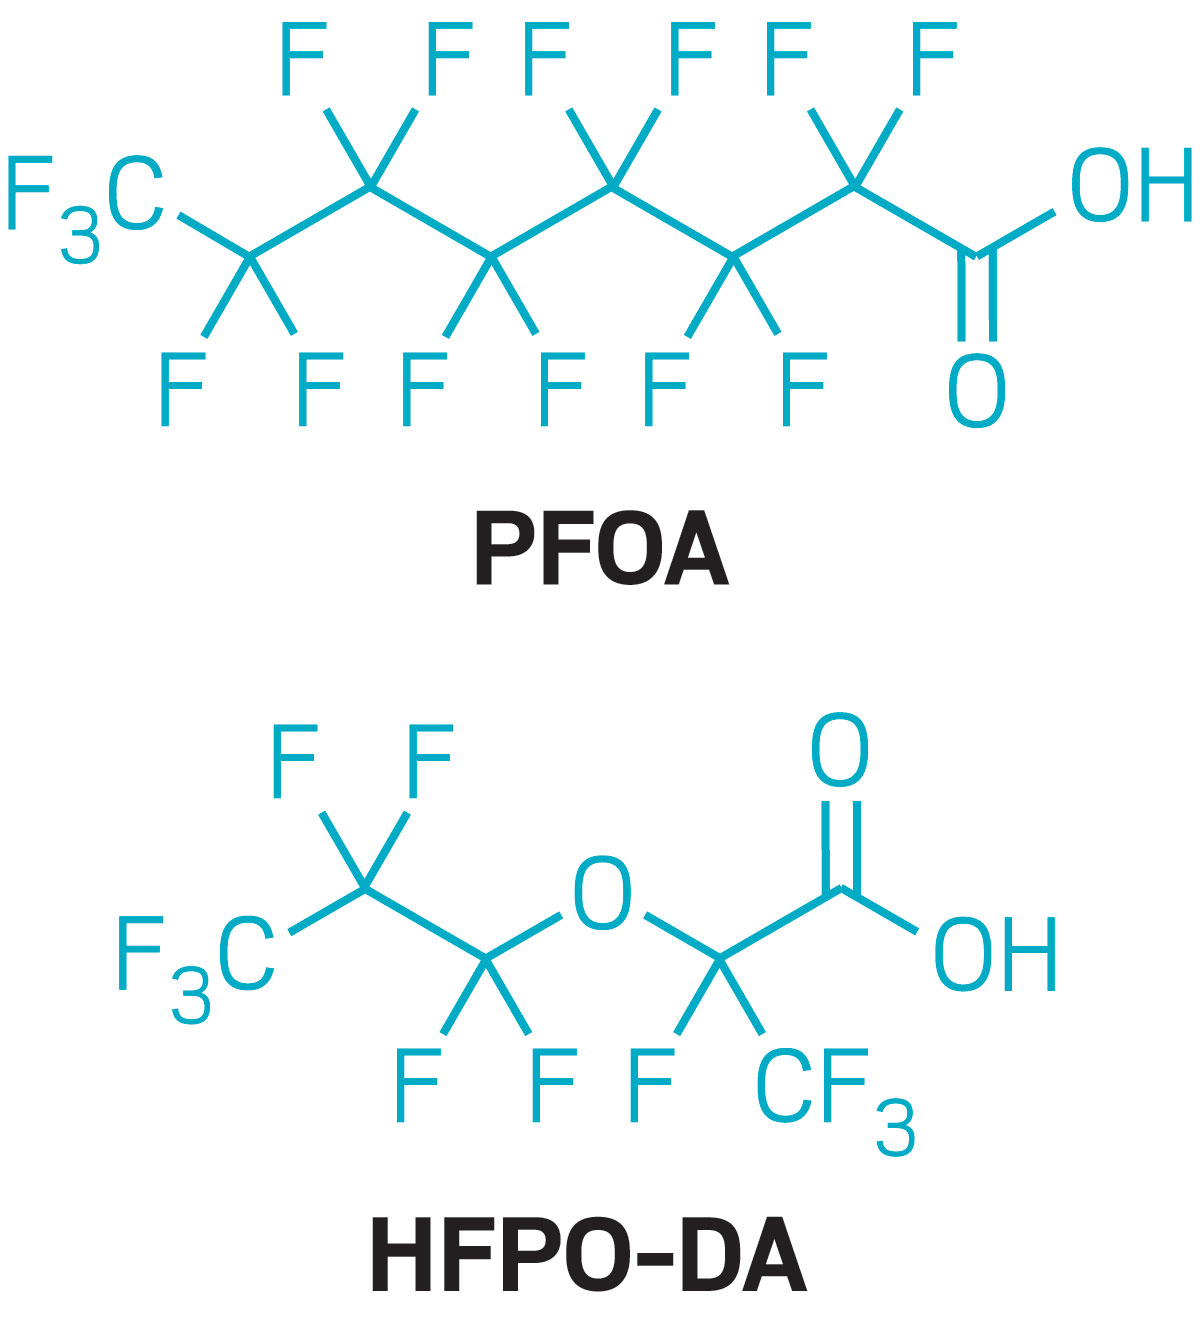 Structures of hexafluoropropylene oxide dimer acid and perfluorooctanoic acid.